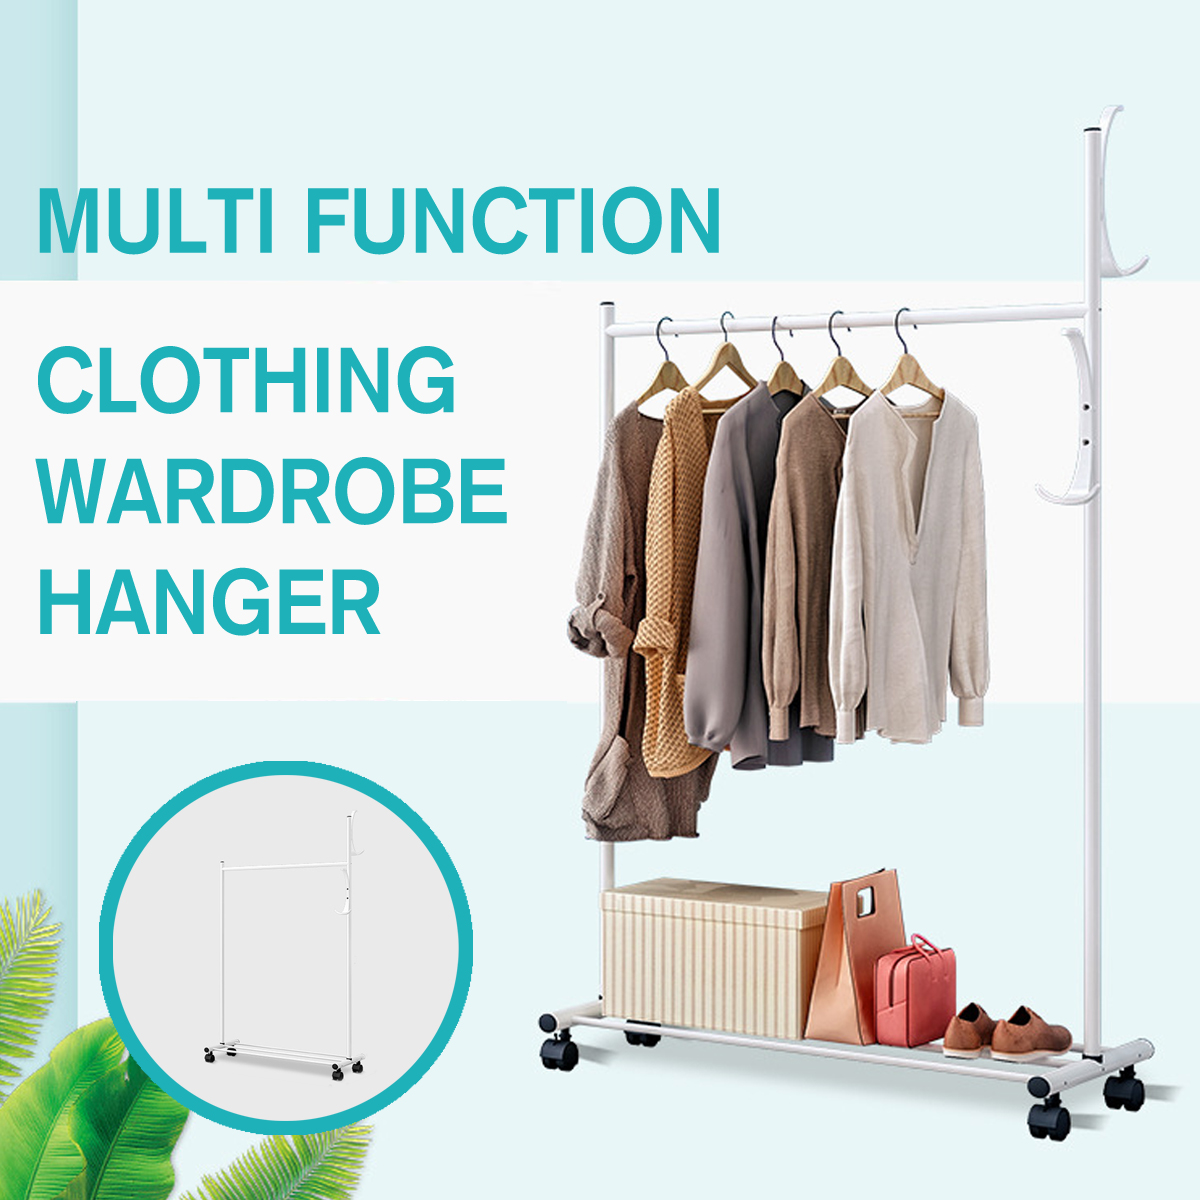 Standing-Landing-Drying-Rack--Cloth-Hanger-Wardrobe-Hanging-Floor-Iron-Organizer-Storage-Shelf-1652393